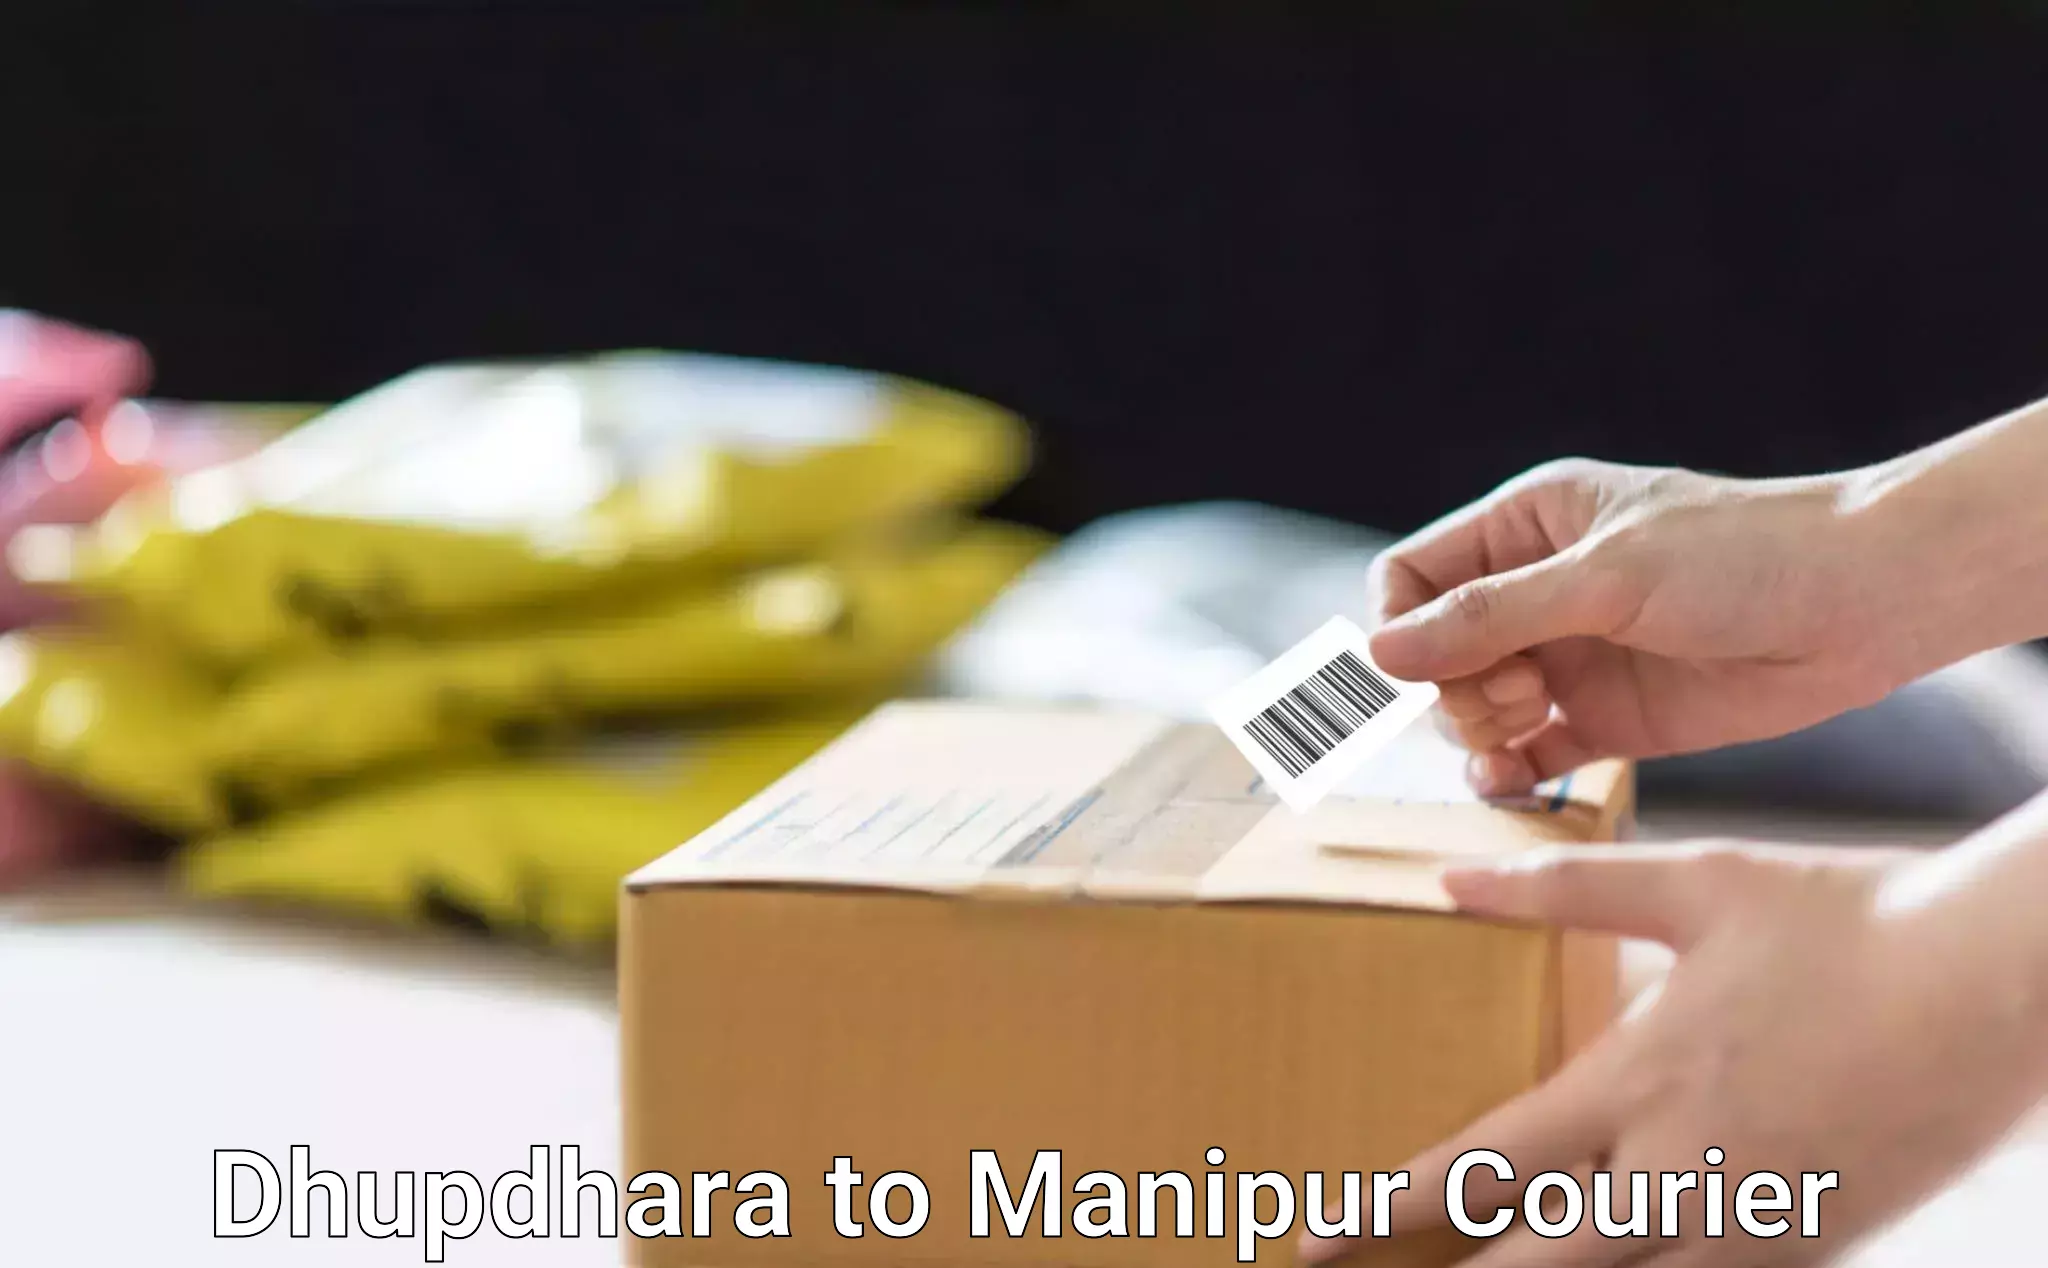 Courier service partnerships Dhupdhara to Kanti